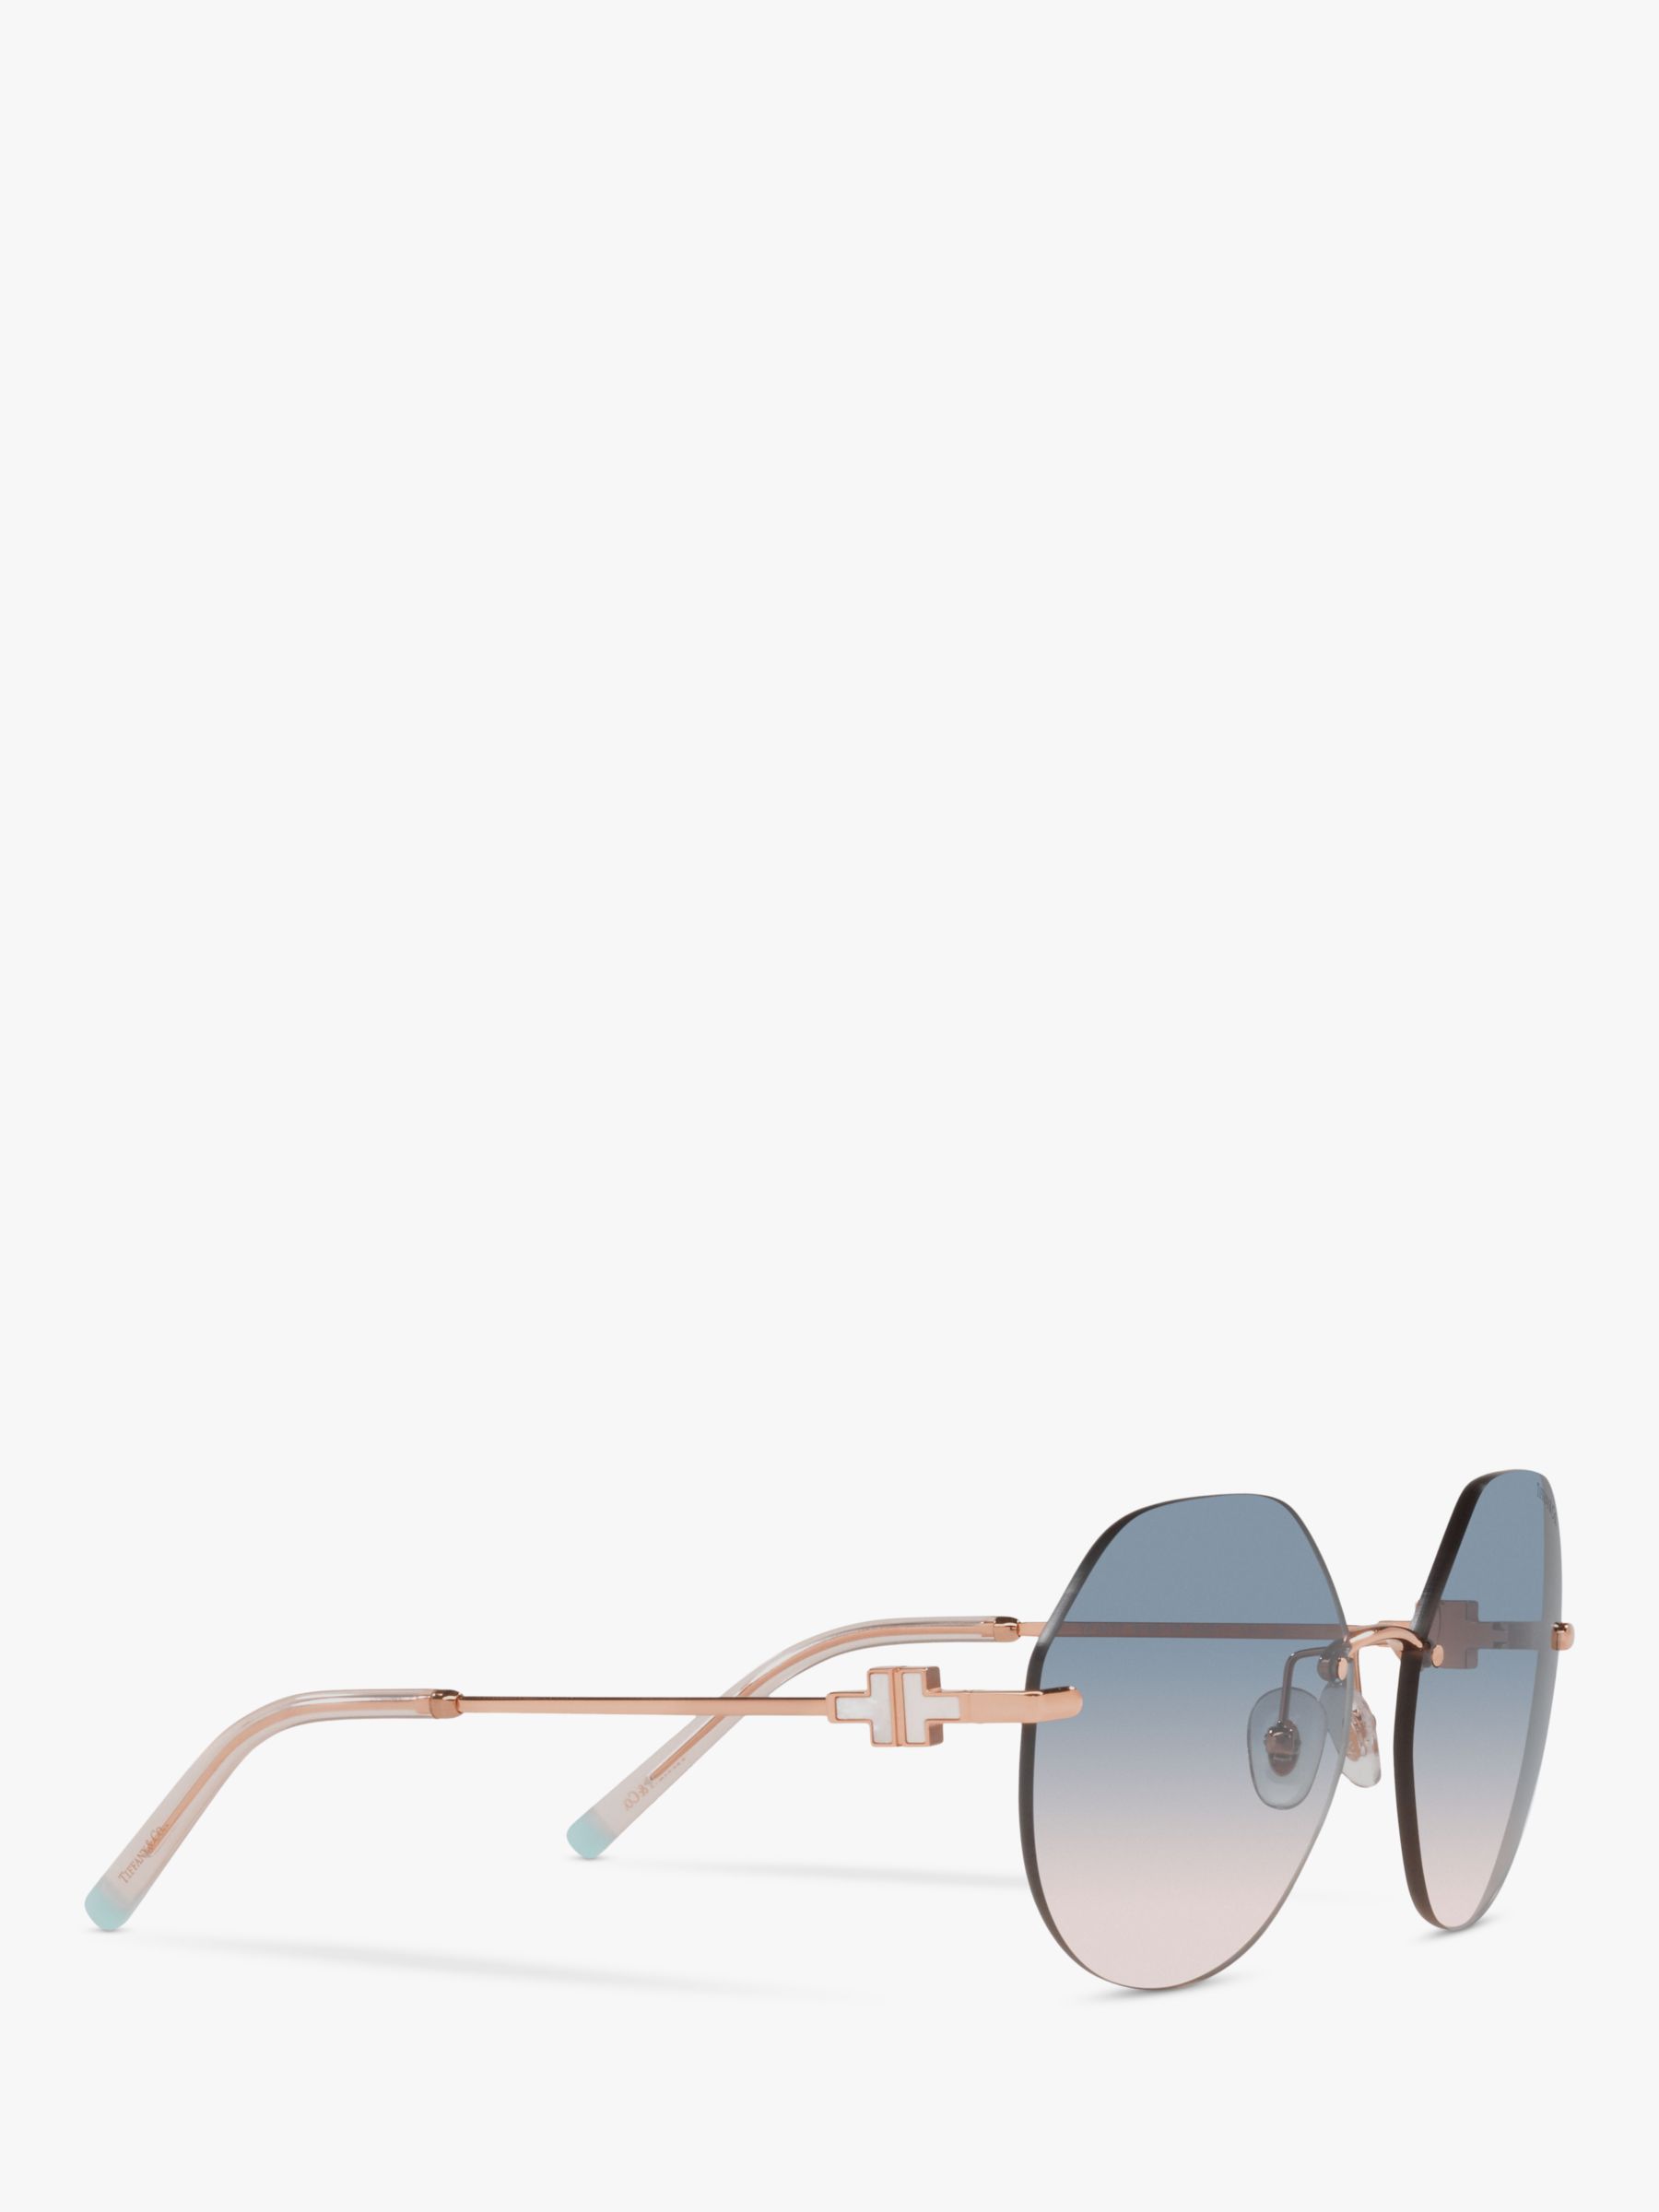 Tiffany & Co TF3077 Women's Irregular Sunglasses, Rubedo